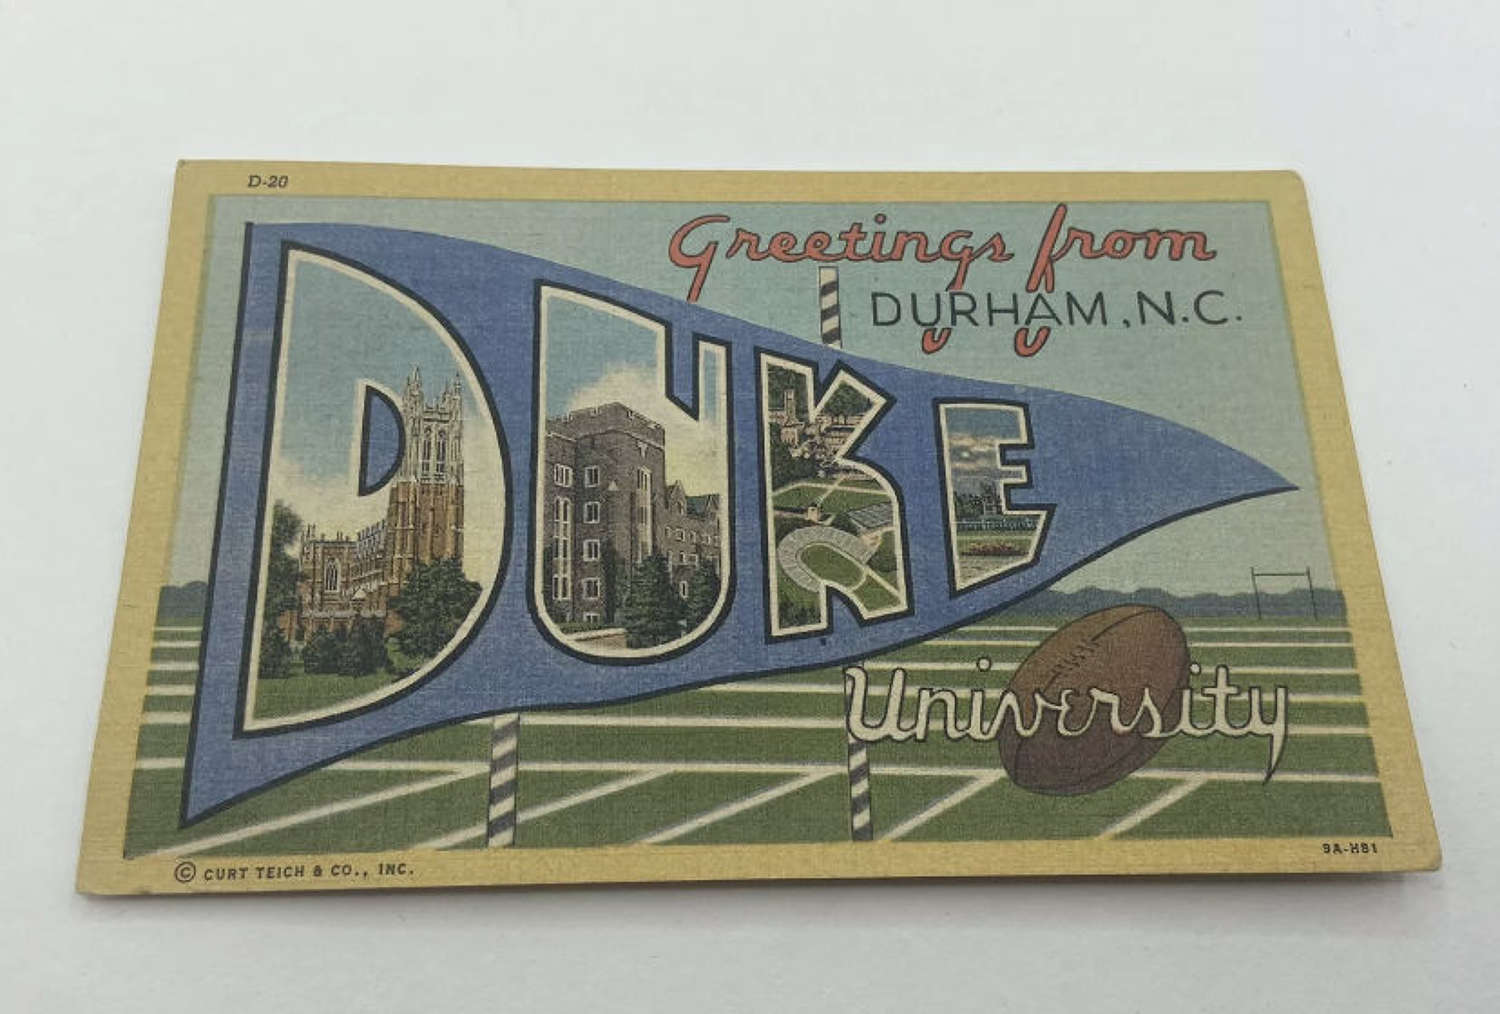 Vintage 1950s Greetings From Duke Durham N.C University Postcard